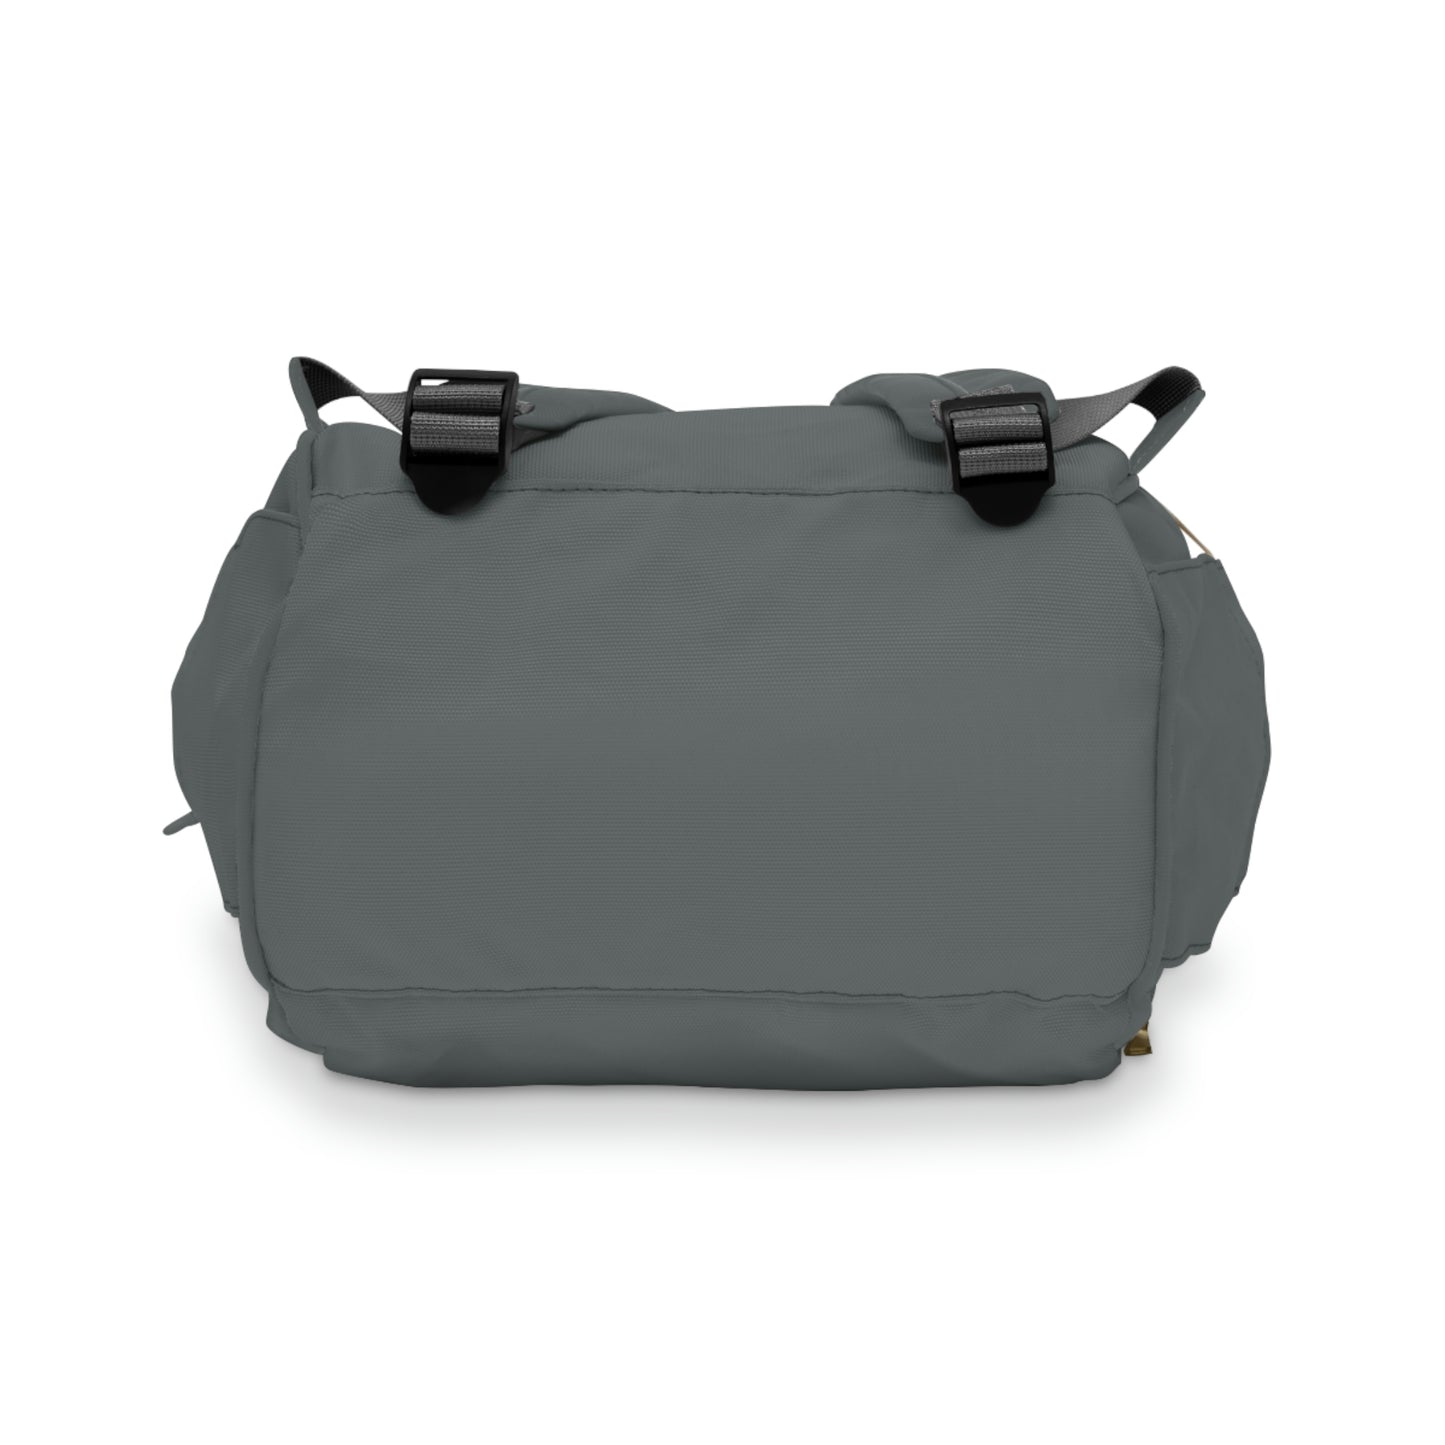 KLYKI Co. Grey Multifunctional Diaper Backpack